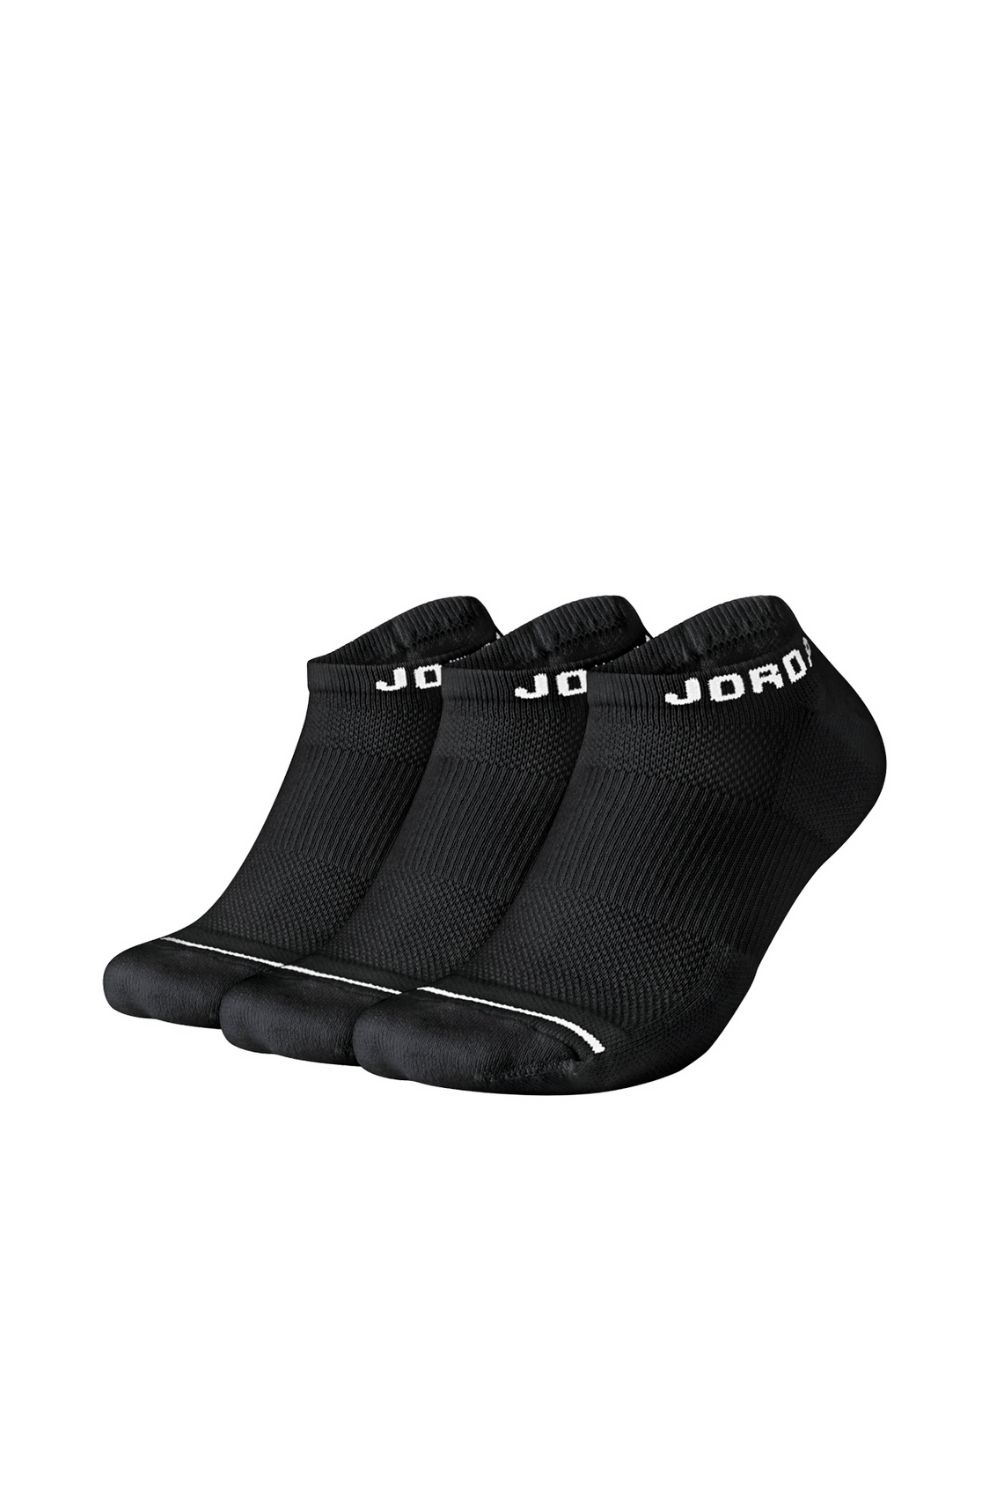 NIKE - Σετ unisex κάλτσες Nike JUMPMAN NO-SHOW μαύρες Γυναικεία/Αξεσουάρ/Κάλτσες